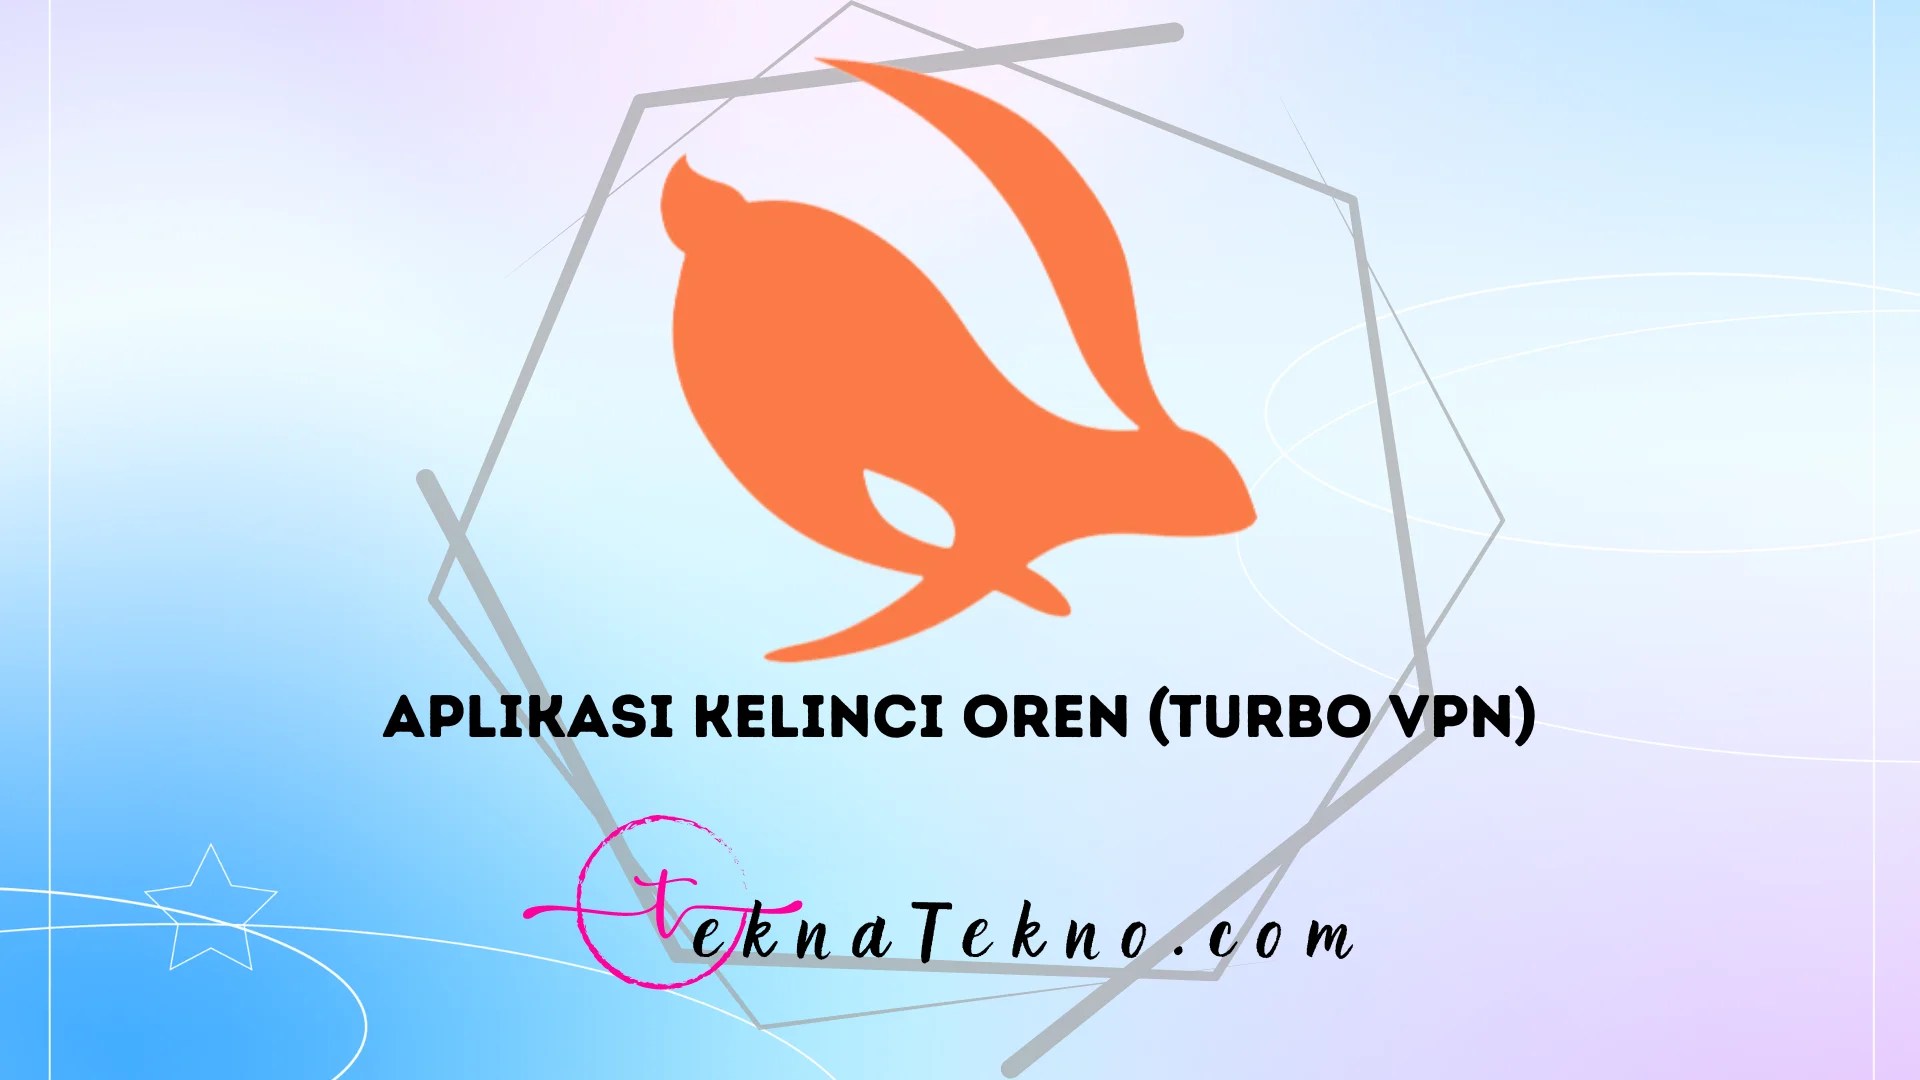 Kegunaan Aplikasi Turbo Vpn. Download Aplikasi Turbo VPN Untuk Nonton Streaming Gratis